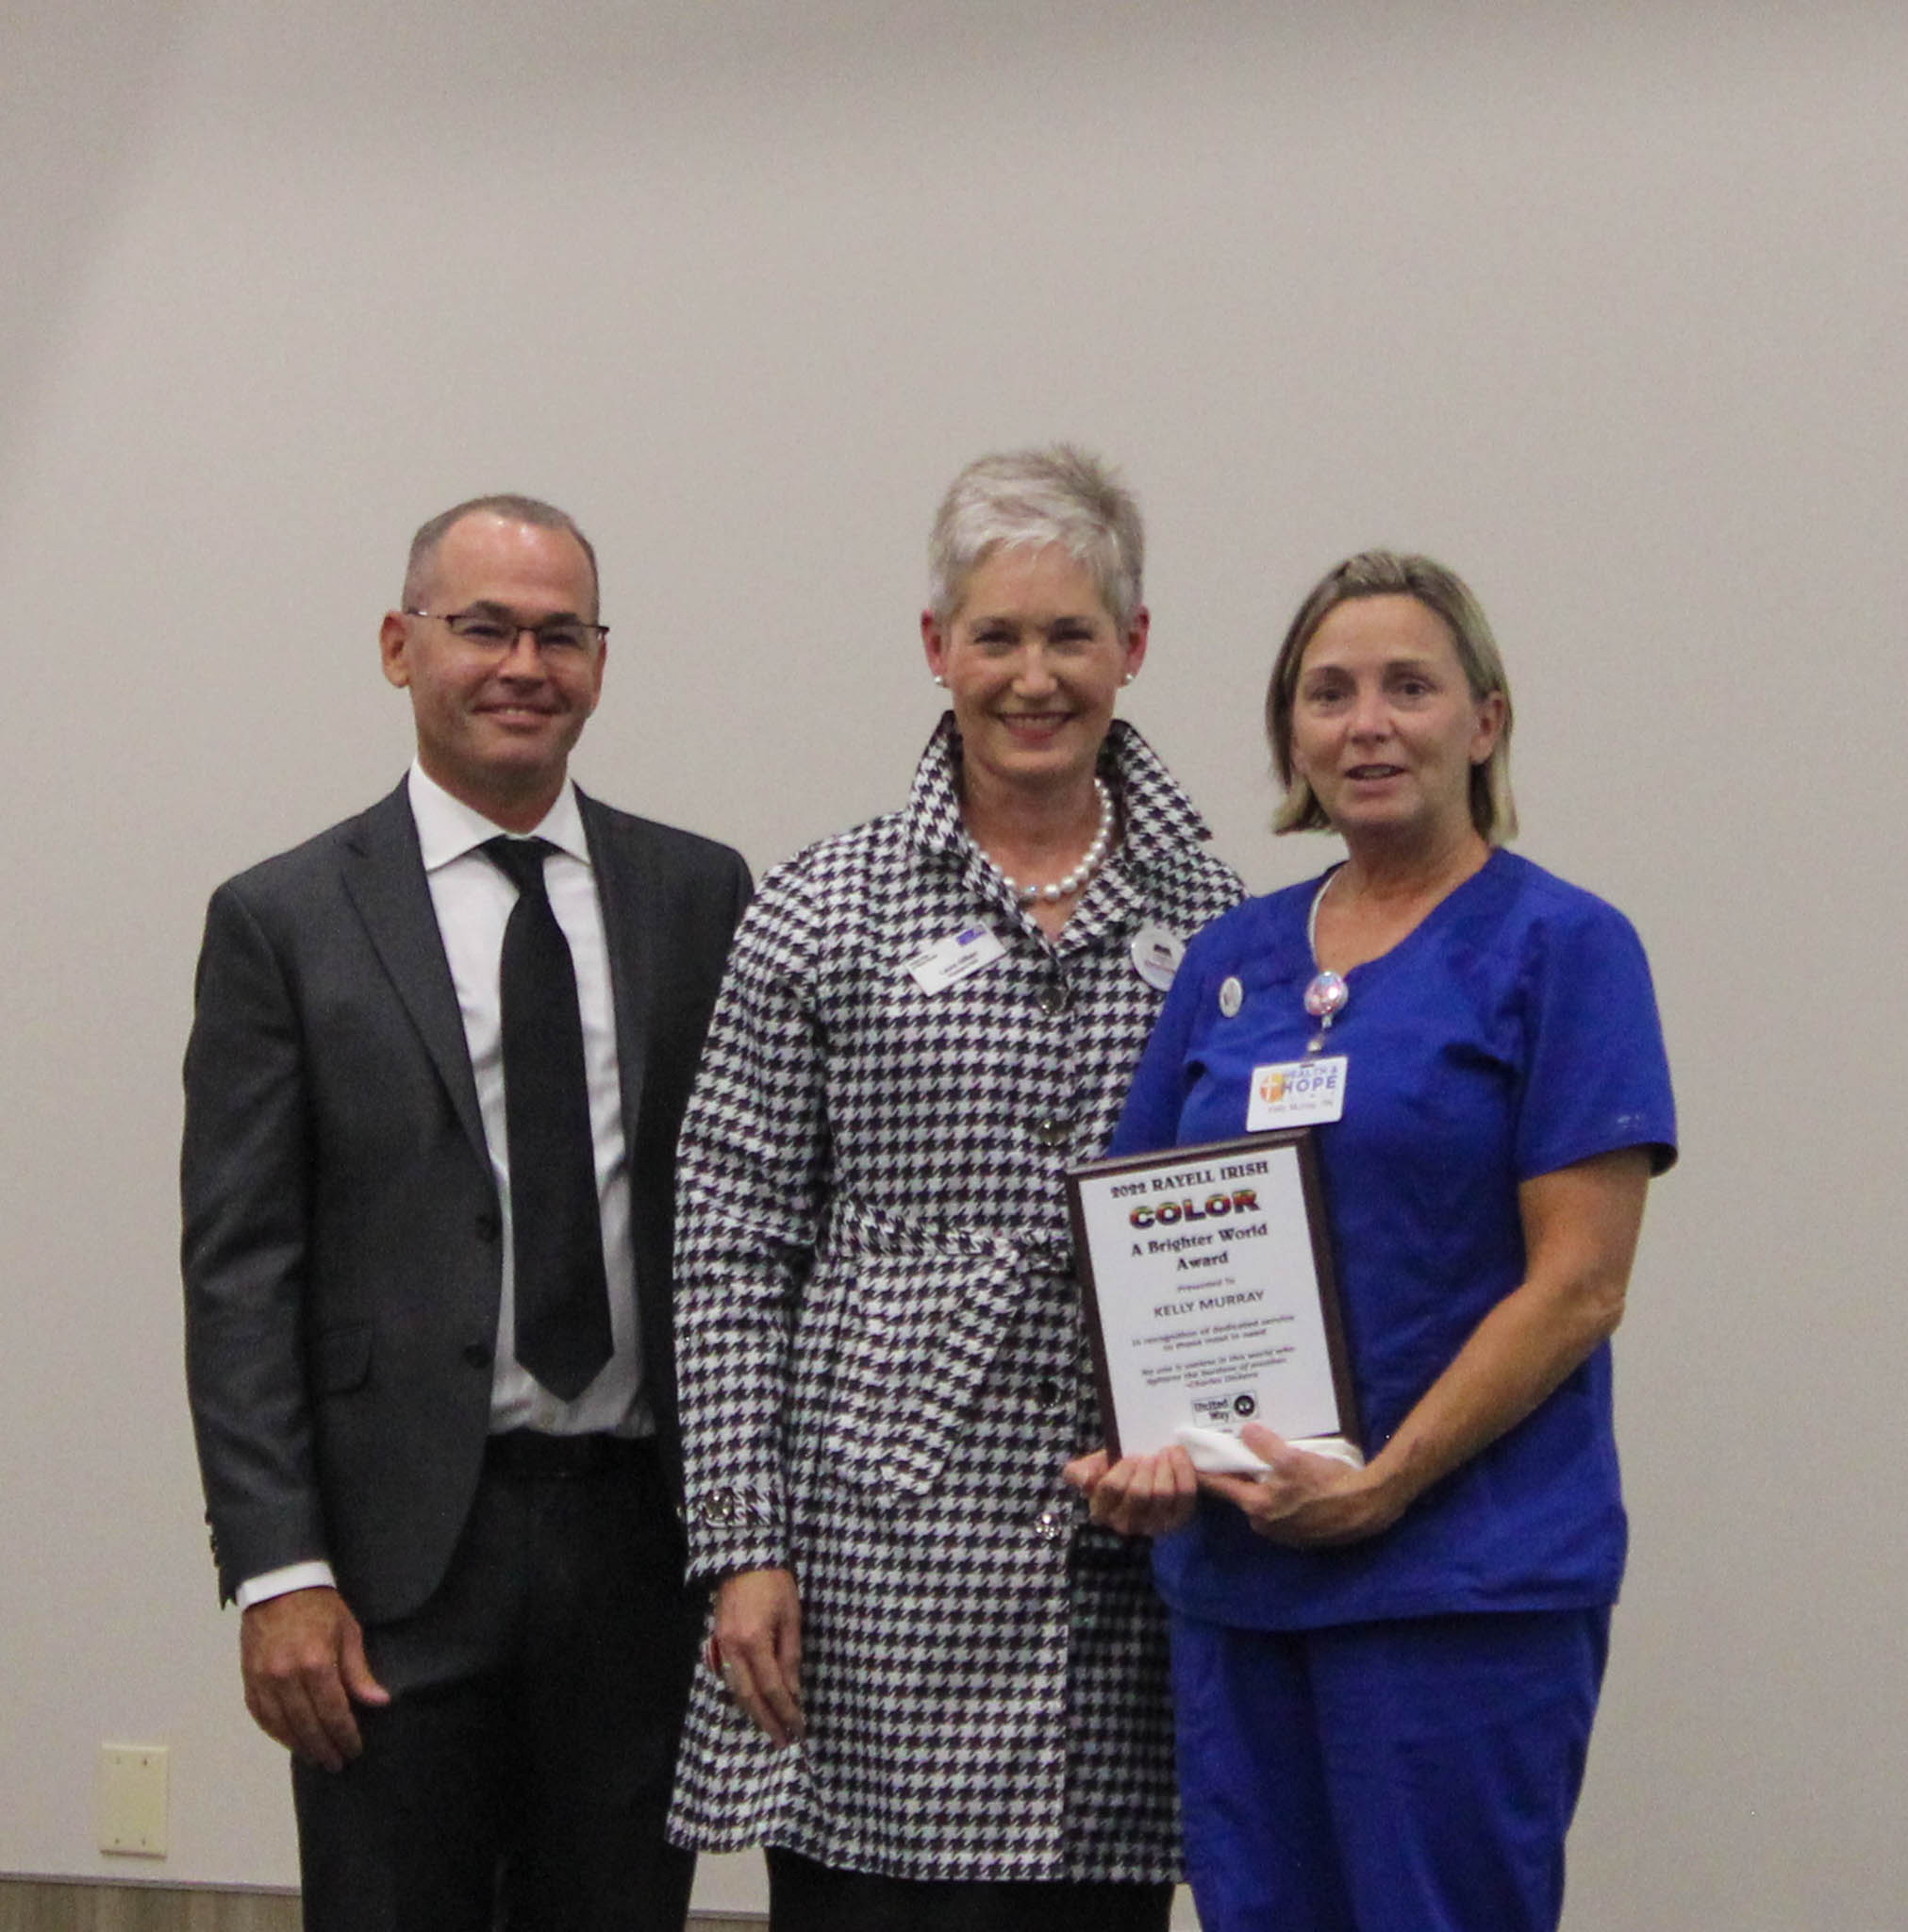 Rayell Irish Award (Outstanding Social Worker) - Kelly Murry, Health and Hope Clinic